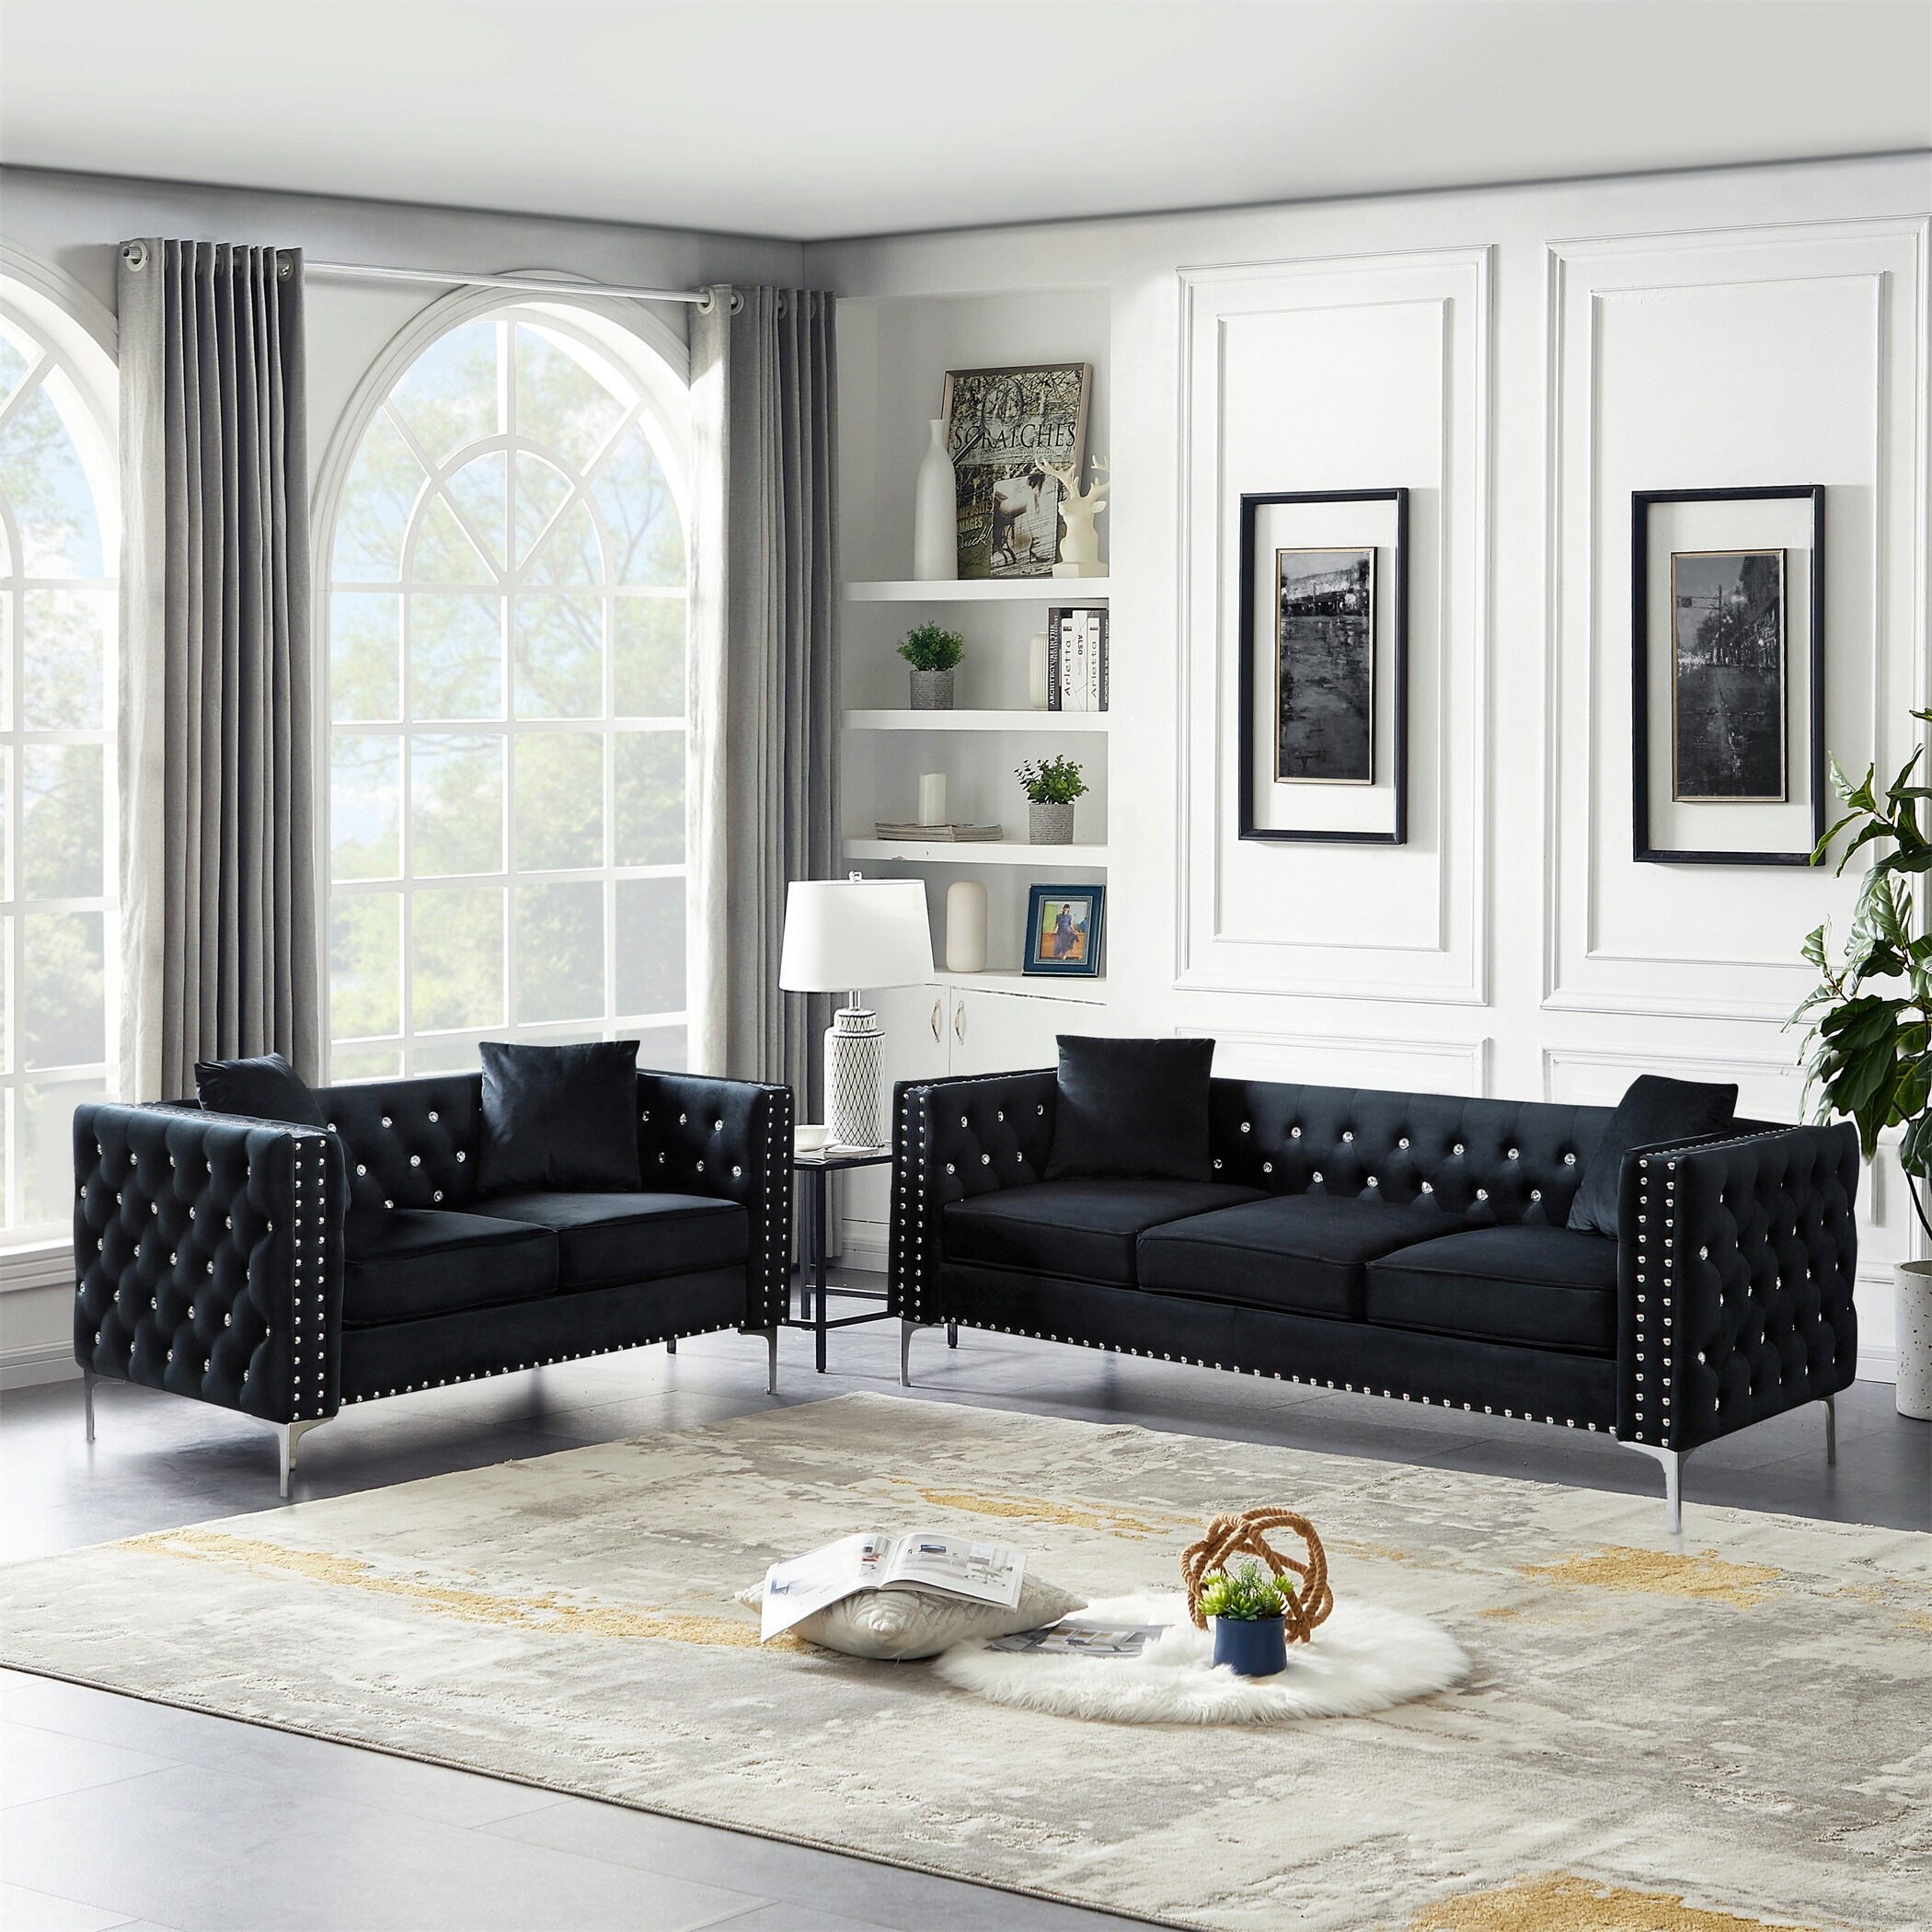 https://ak1.ostkcdn.com/images/products/is/images/direct/e9811583e55d4a73bc6664c0495741594507ba22/2-Piece-Sectional-Sofa-Velvet-Sofa-Loveseat-Living-Room-Set-4-Pillows.jpg